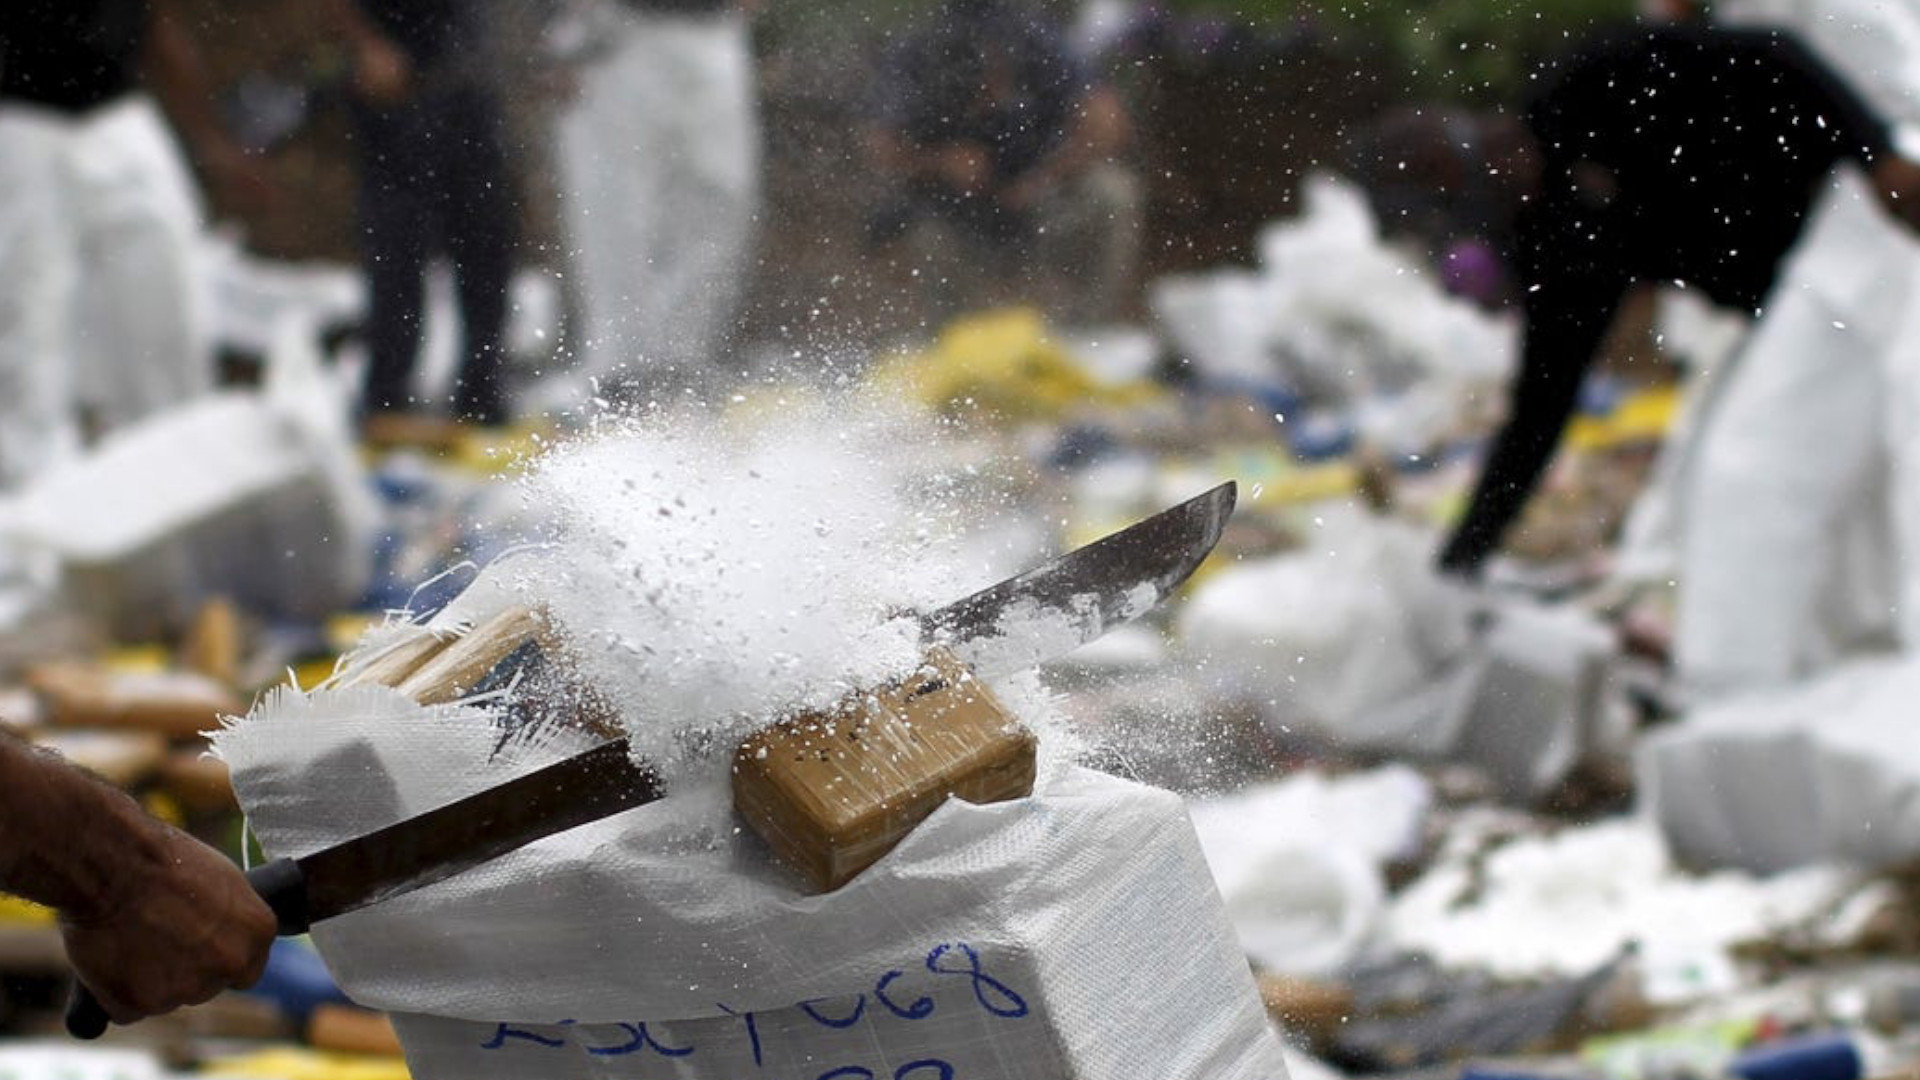 Cocaine money threatens democracy, freedoms in Turkey